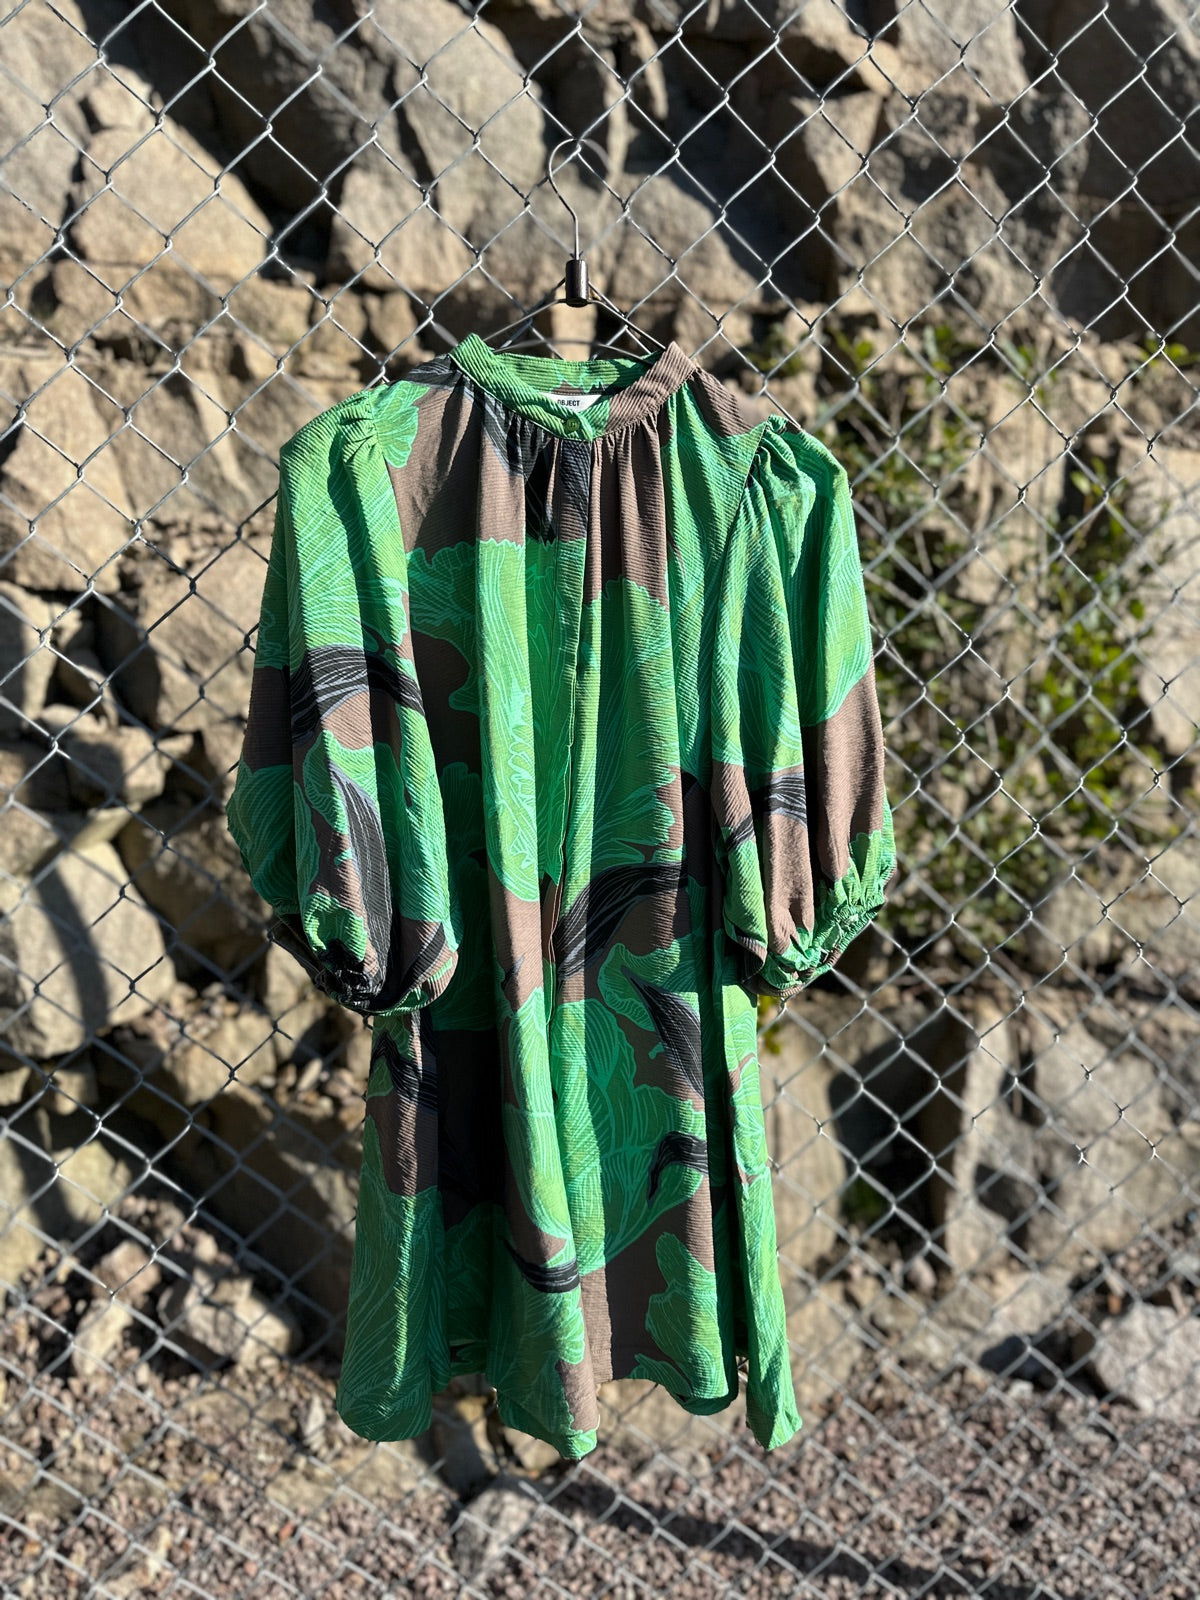 Objribini Short Dress Fossil Fair Green